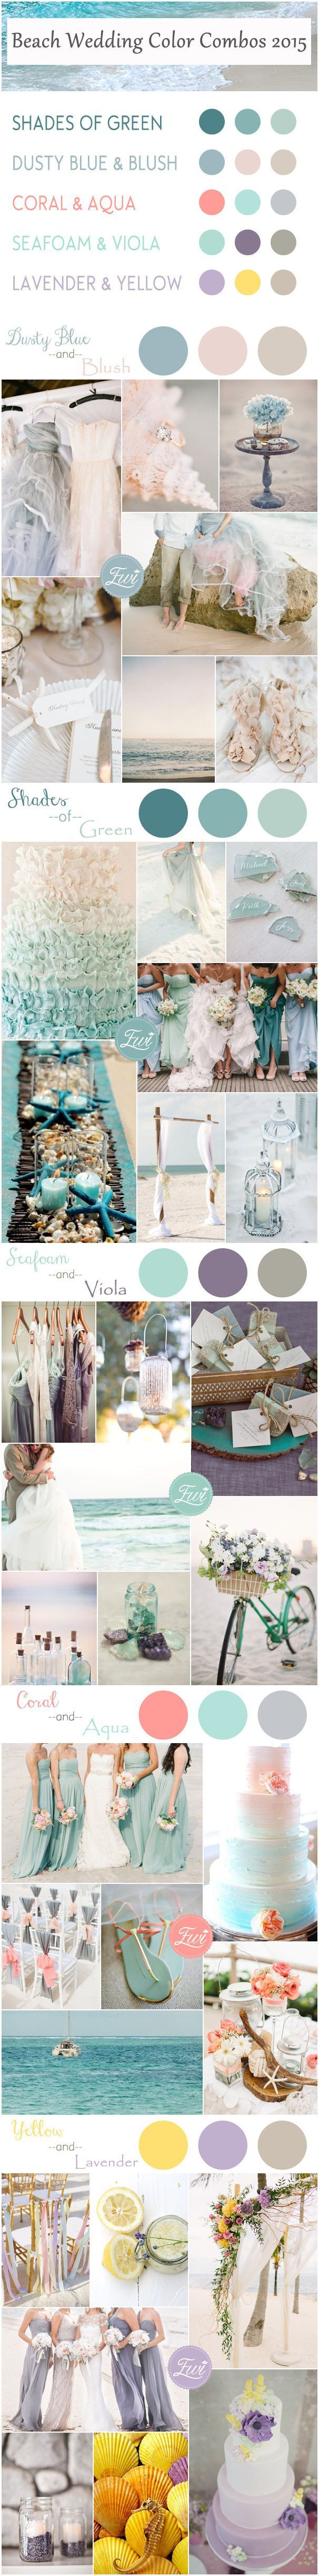 Top 5 Beach Wedding Color Ideas for Summer 2015